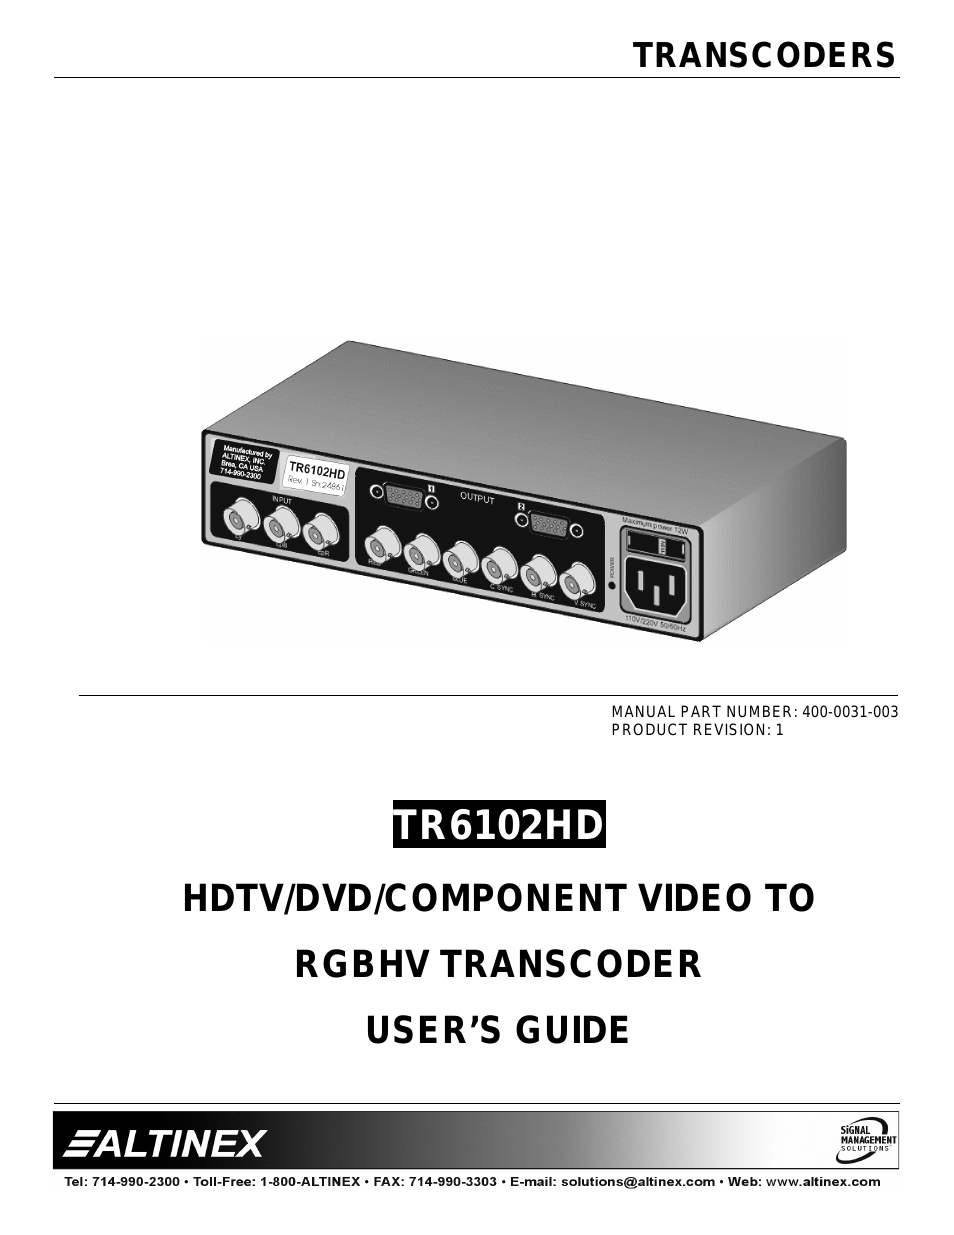 HDTV/DVD/Component Video to RGBHV Transcoder TR6102HD